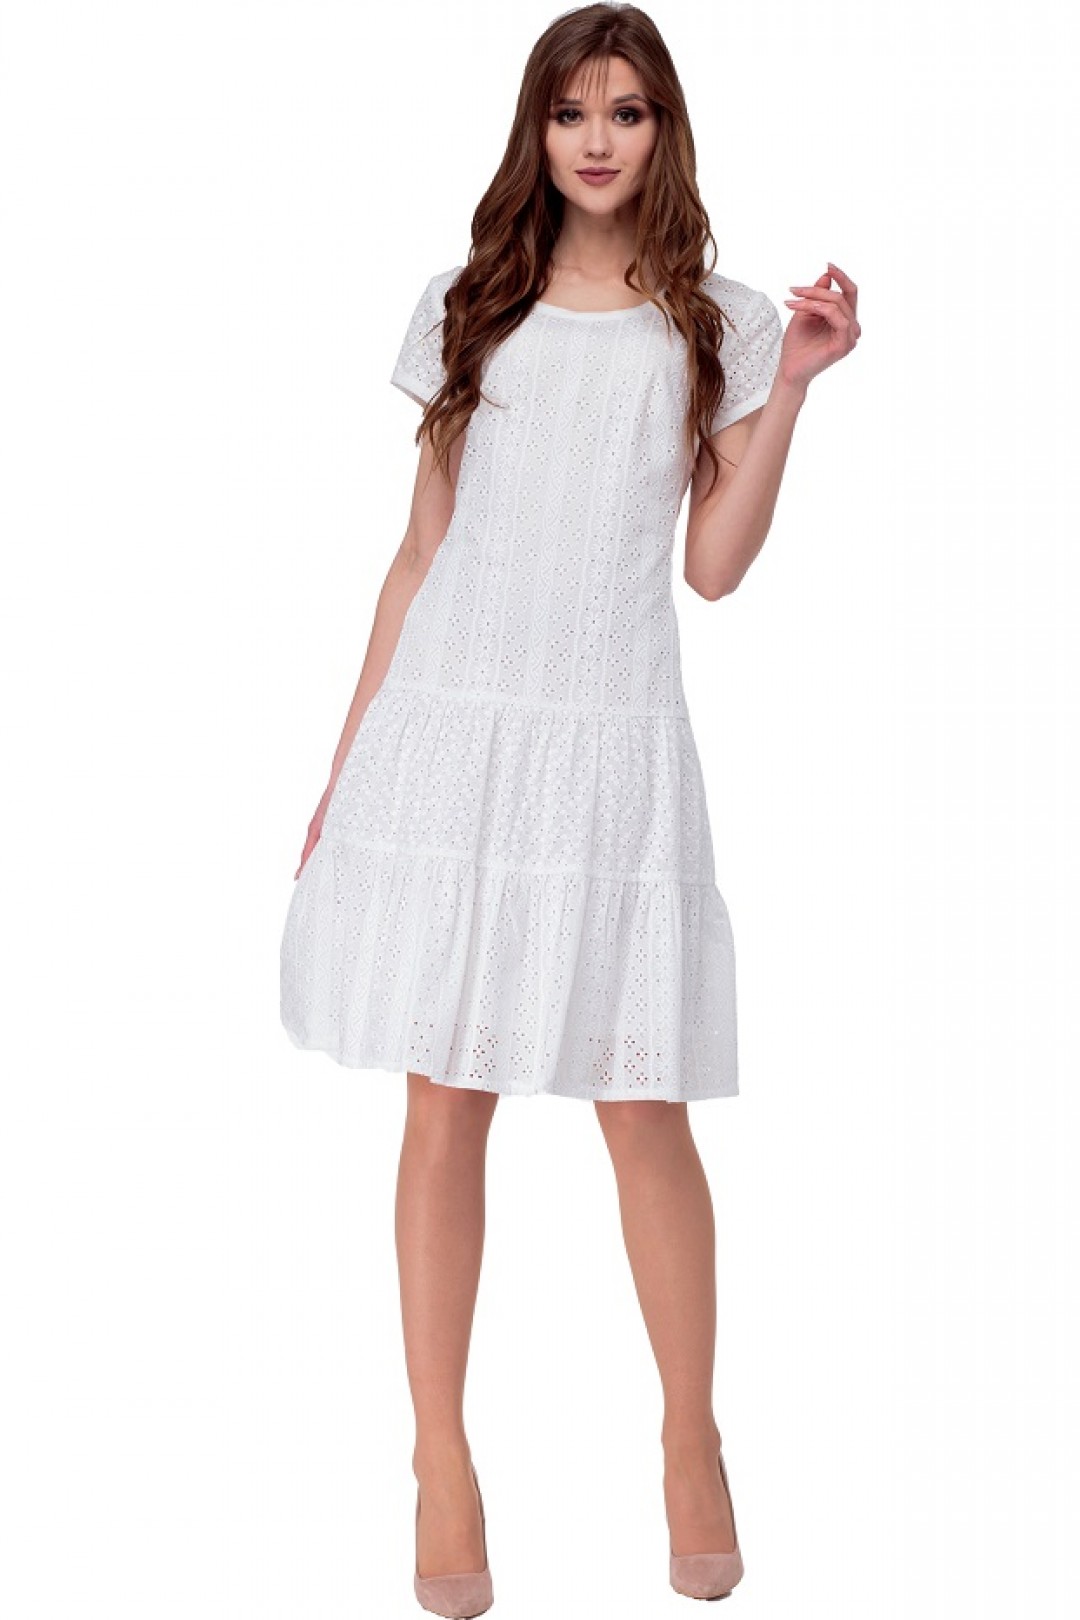 Платье Amori 9524 молочный.